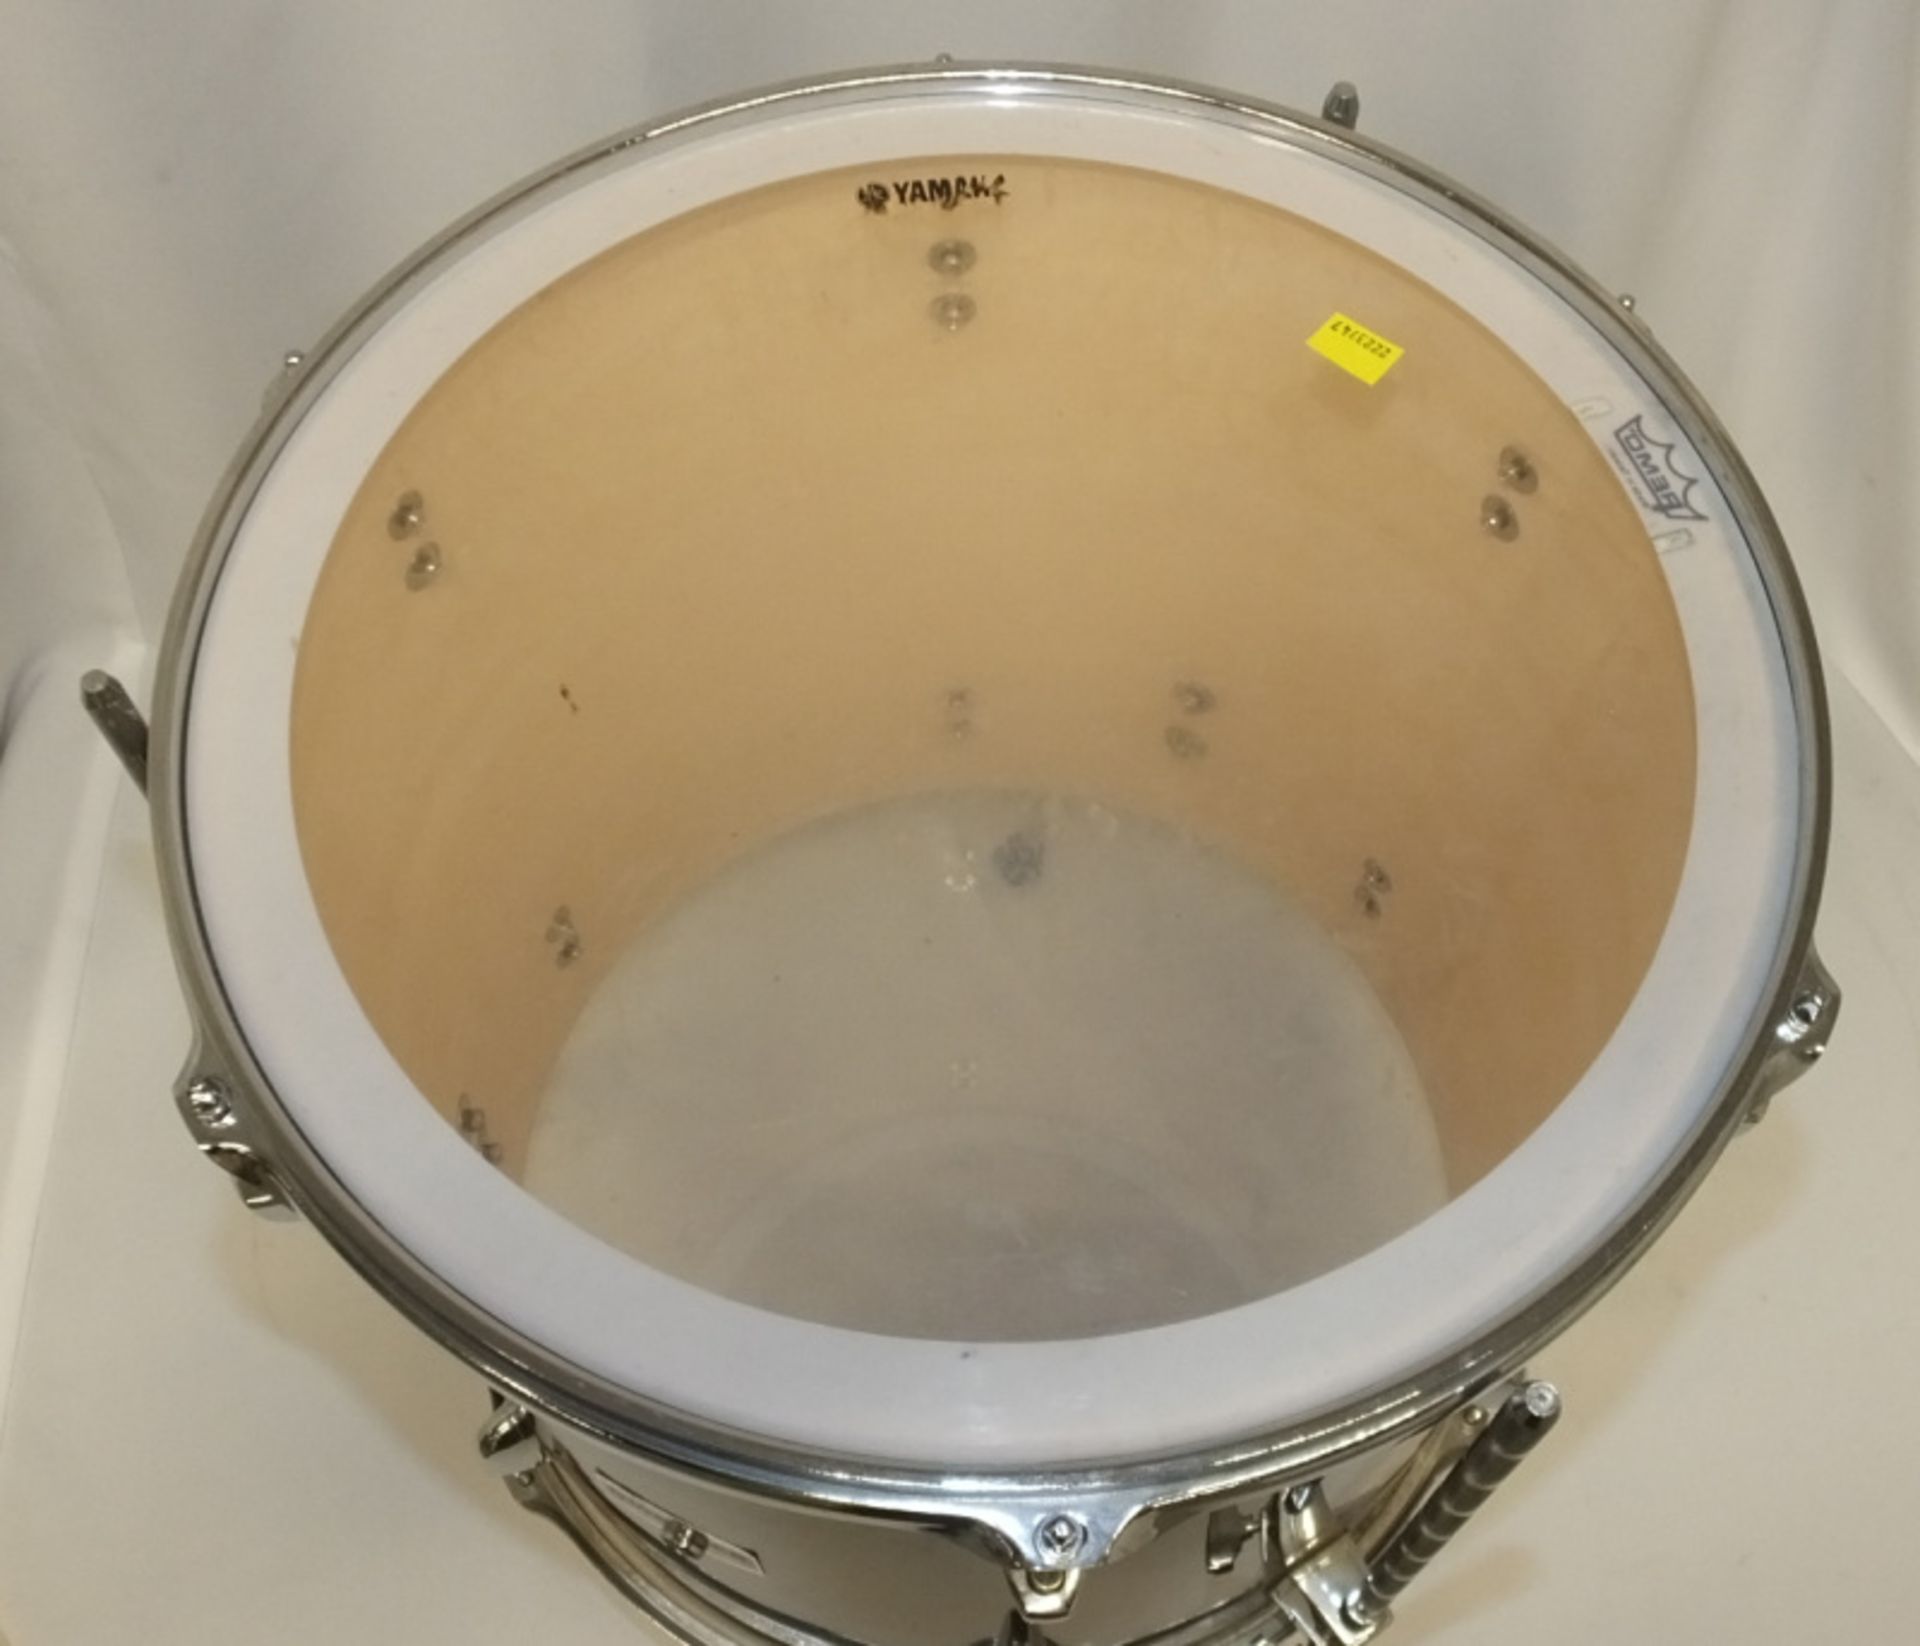 Yamaha Gigmaker Drum Kit - details in the description - Image 24 of 31